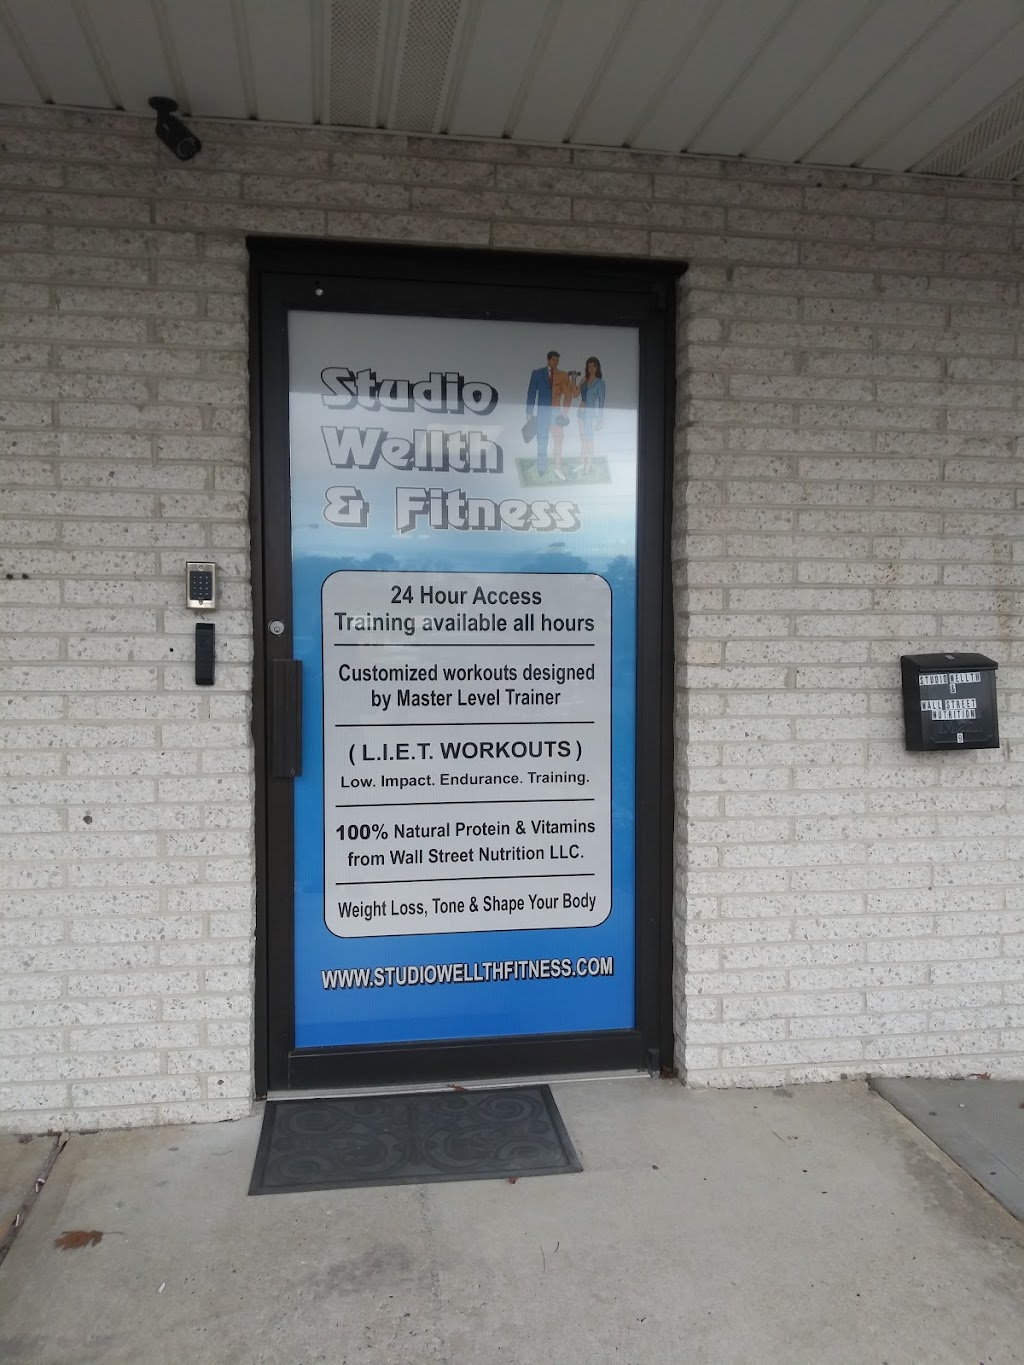 Studio Wellth & Fitness | 1174 Fischer Blvd, Toms River, NJ 08753 | Phone: (732) 228-7654